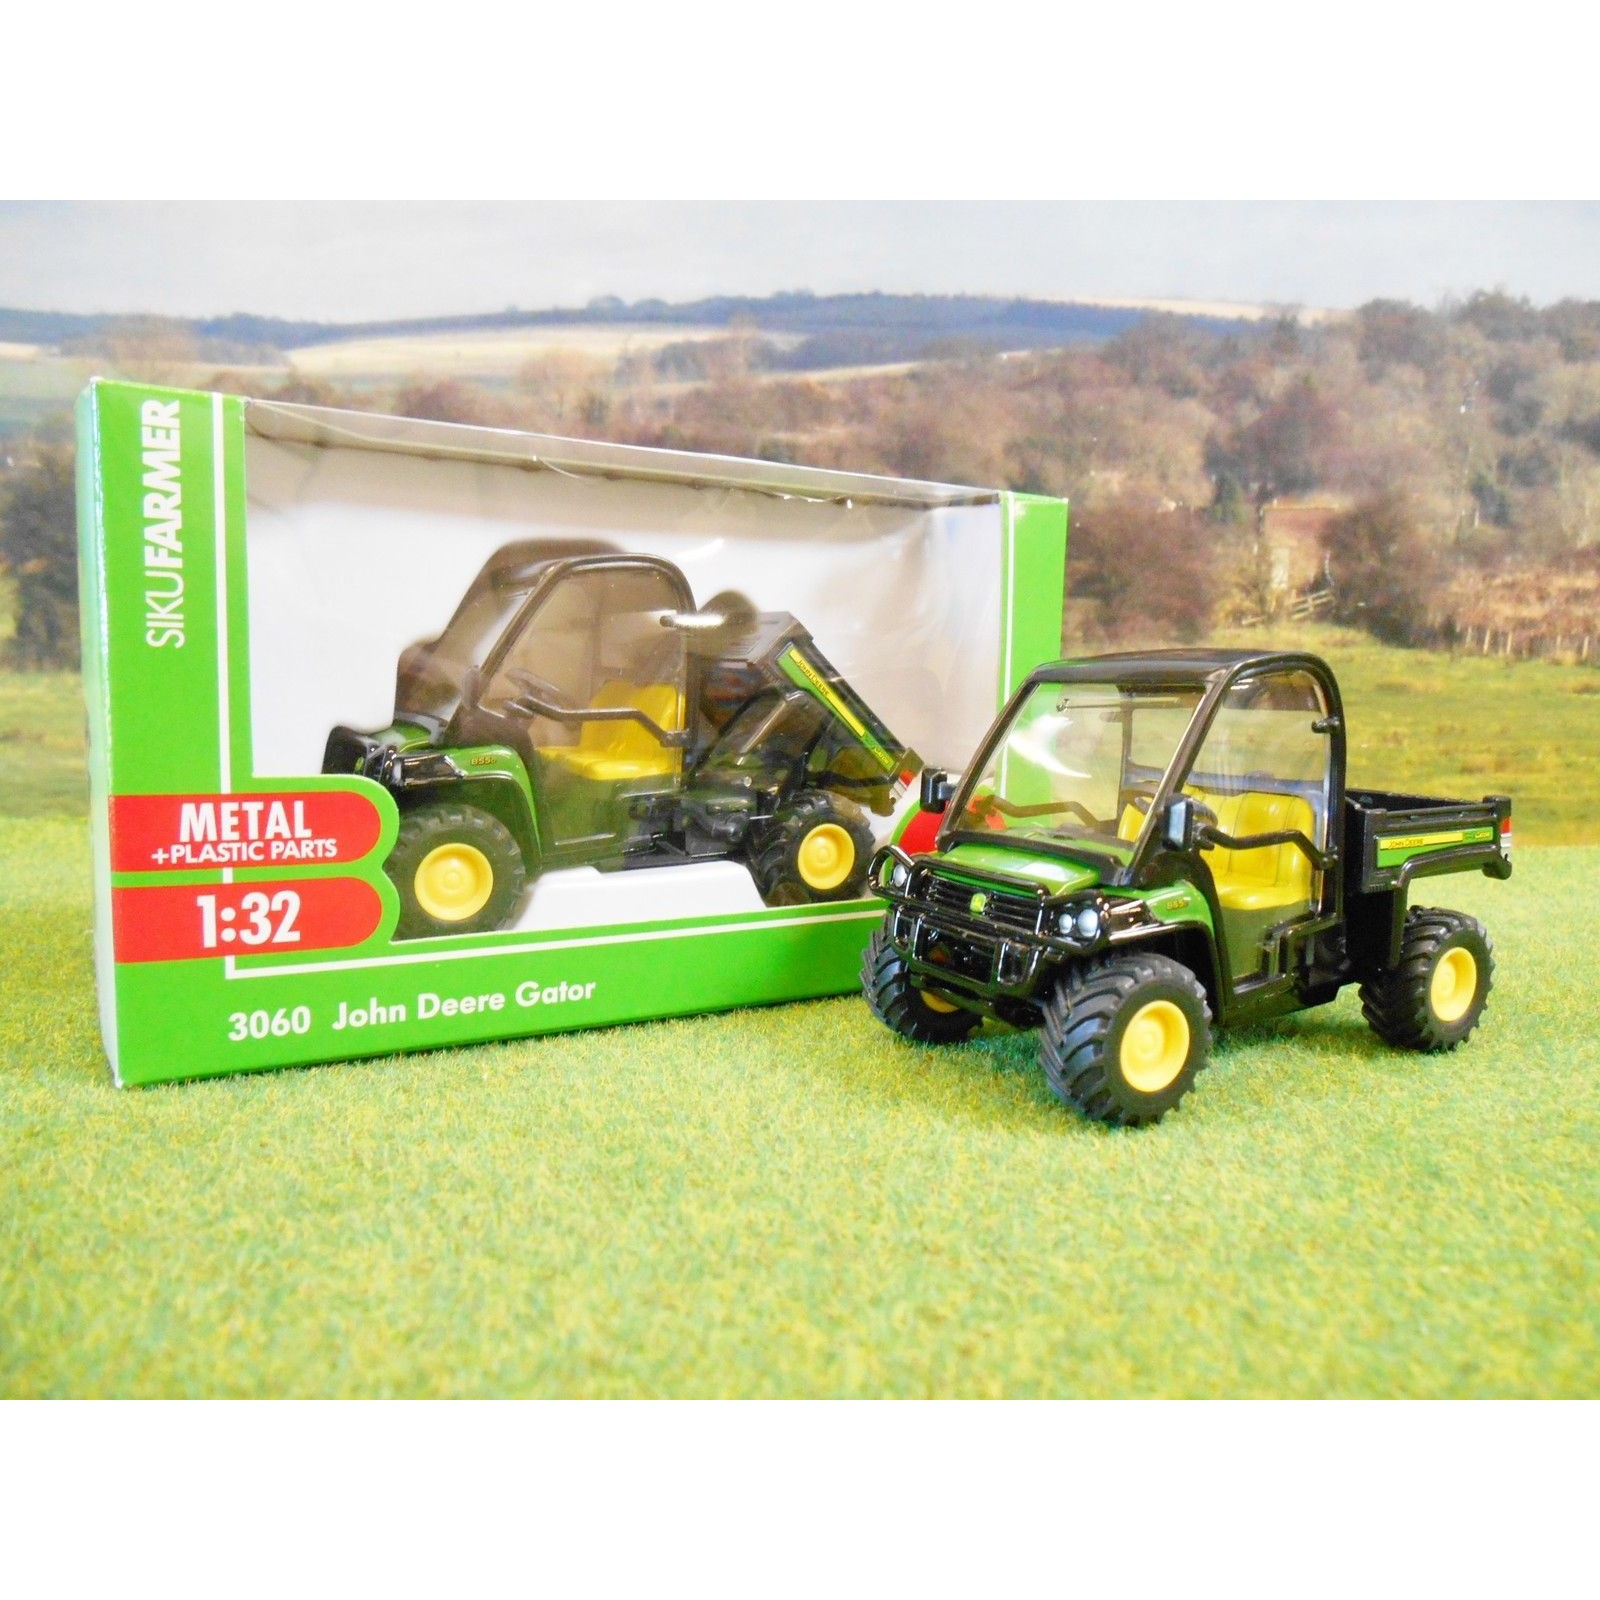 SIKU 1:32 FARM - One32 Farm toys and models